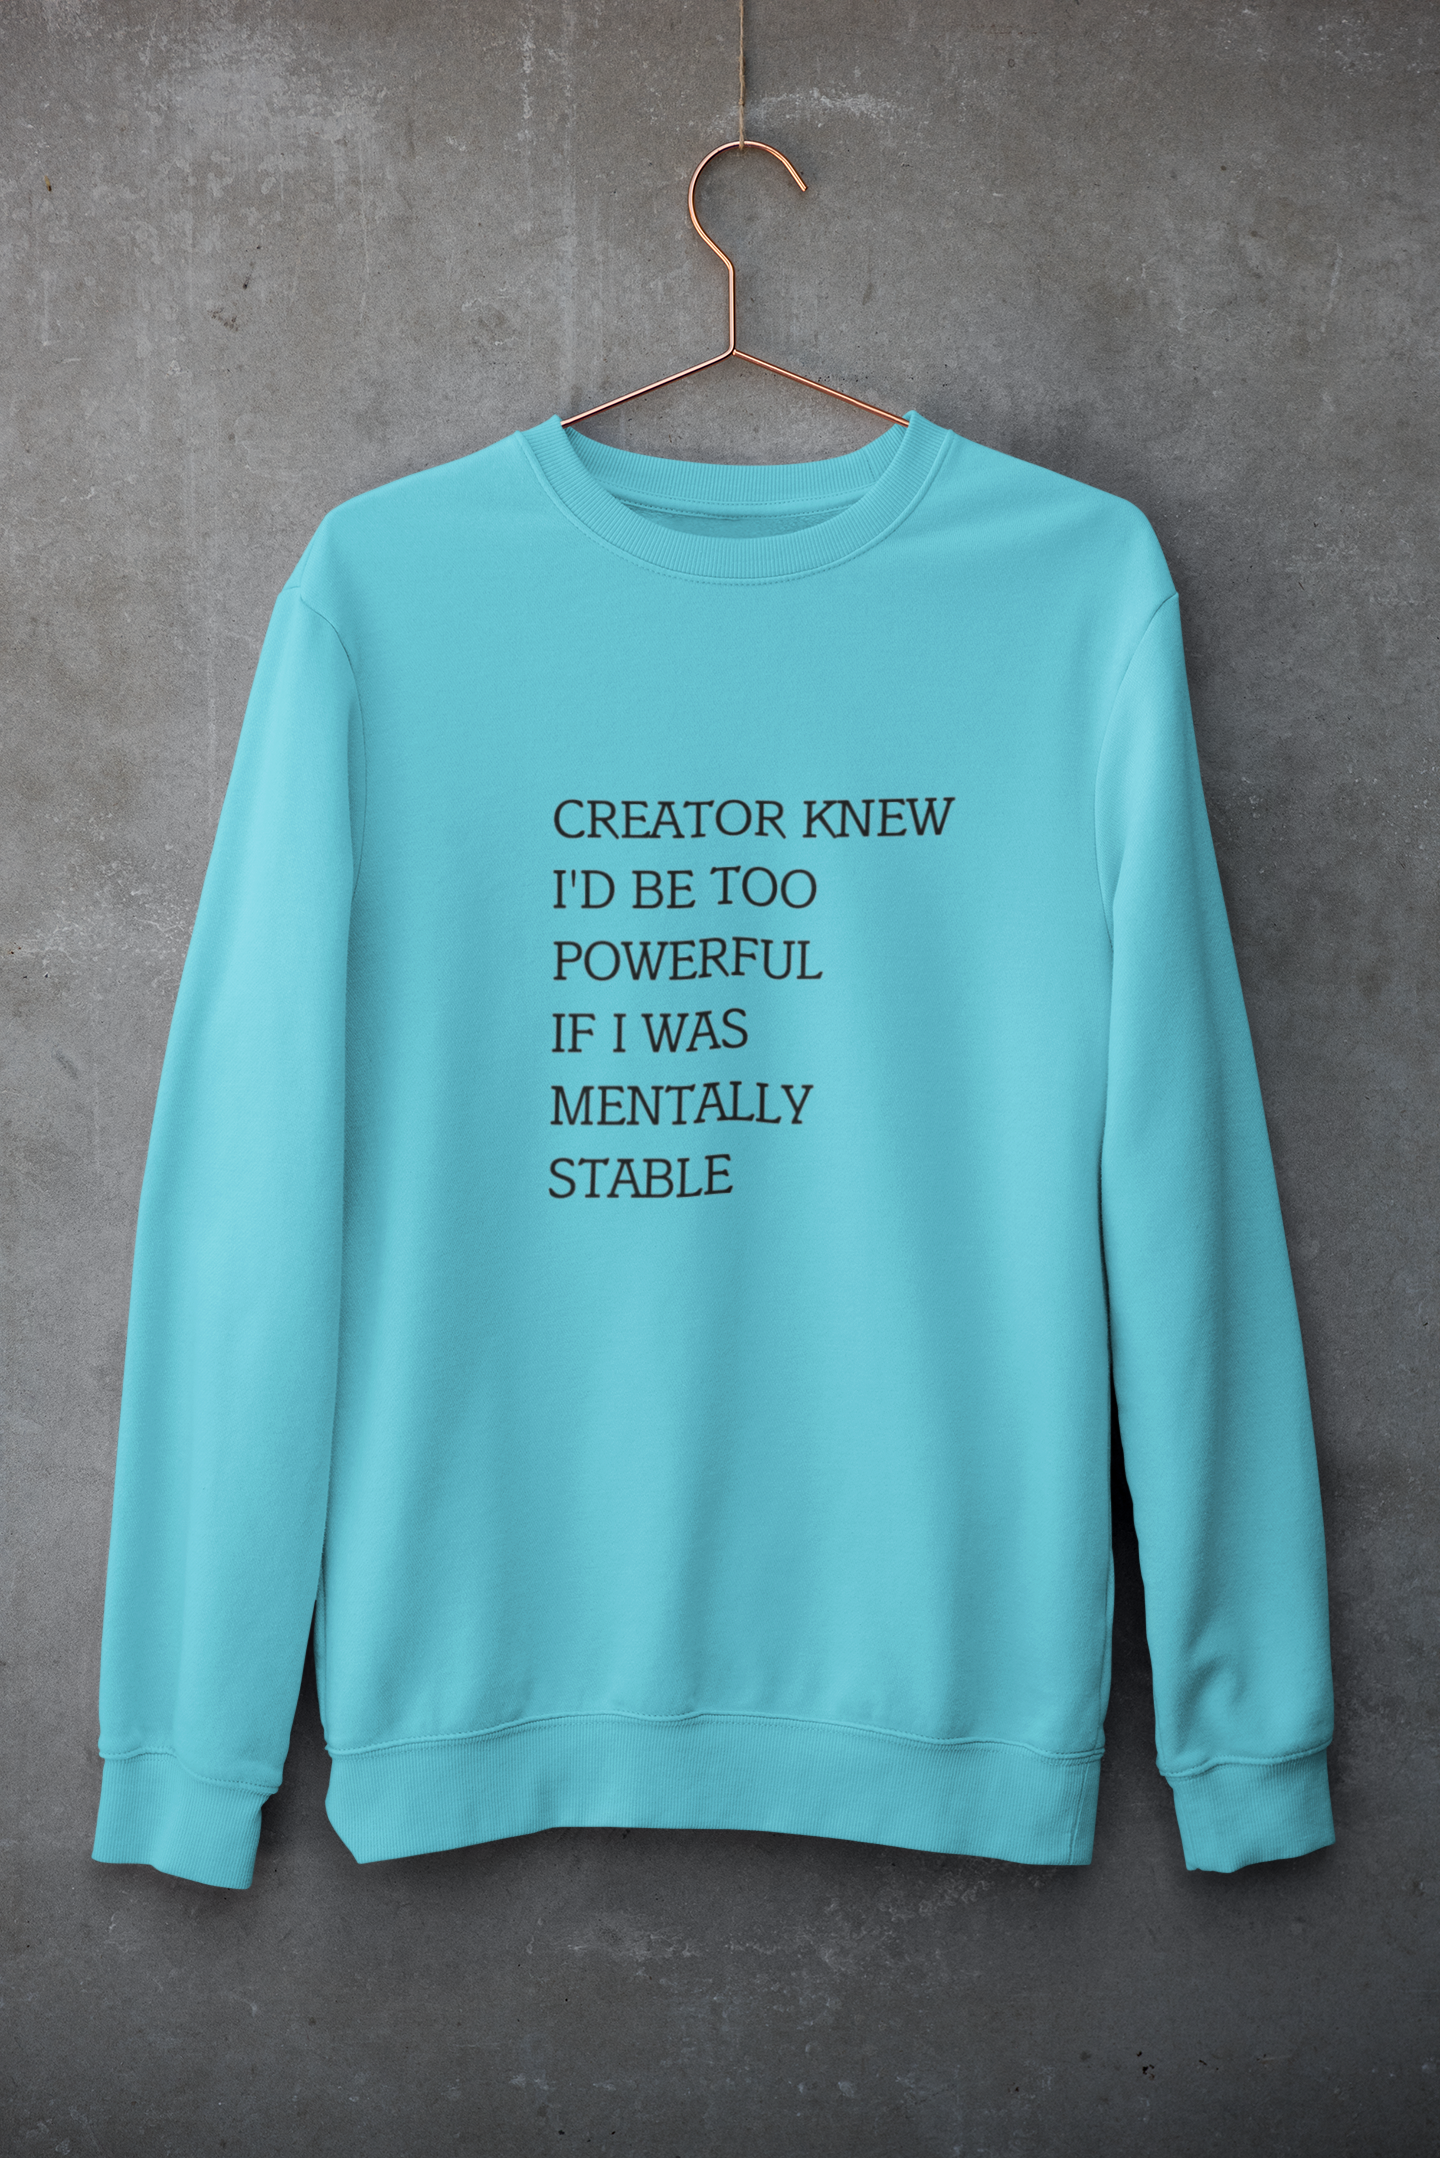 Creator knew | Sweatshirt